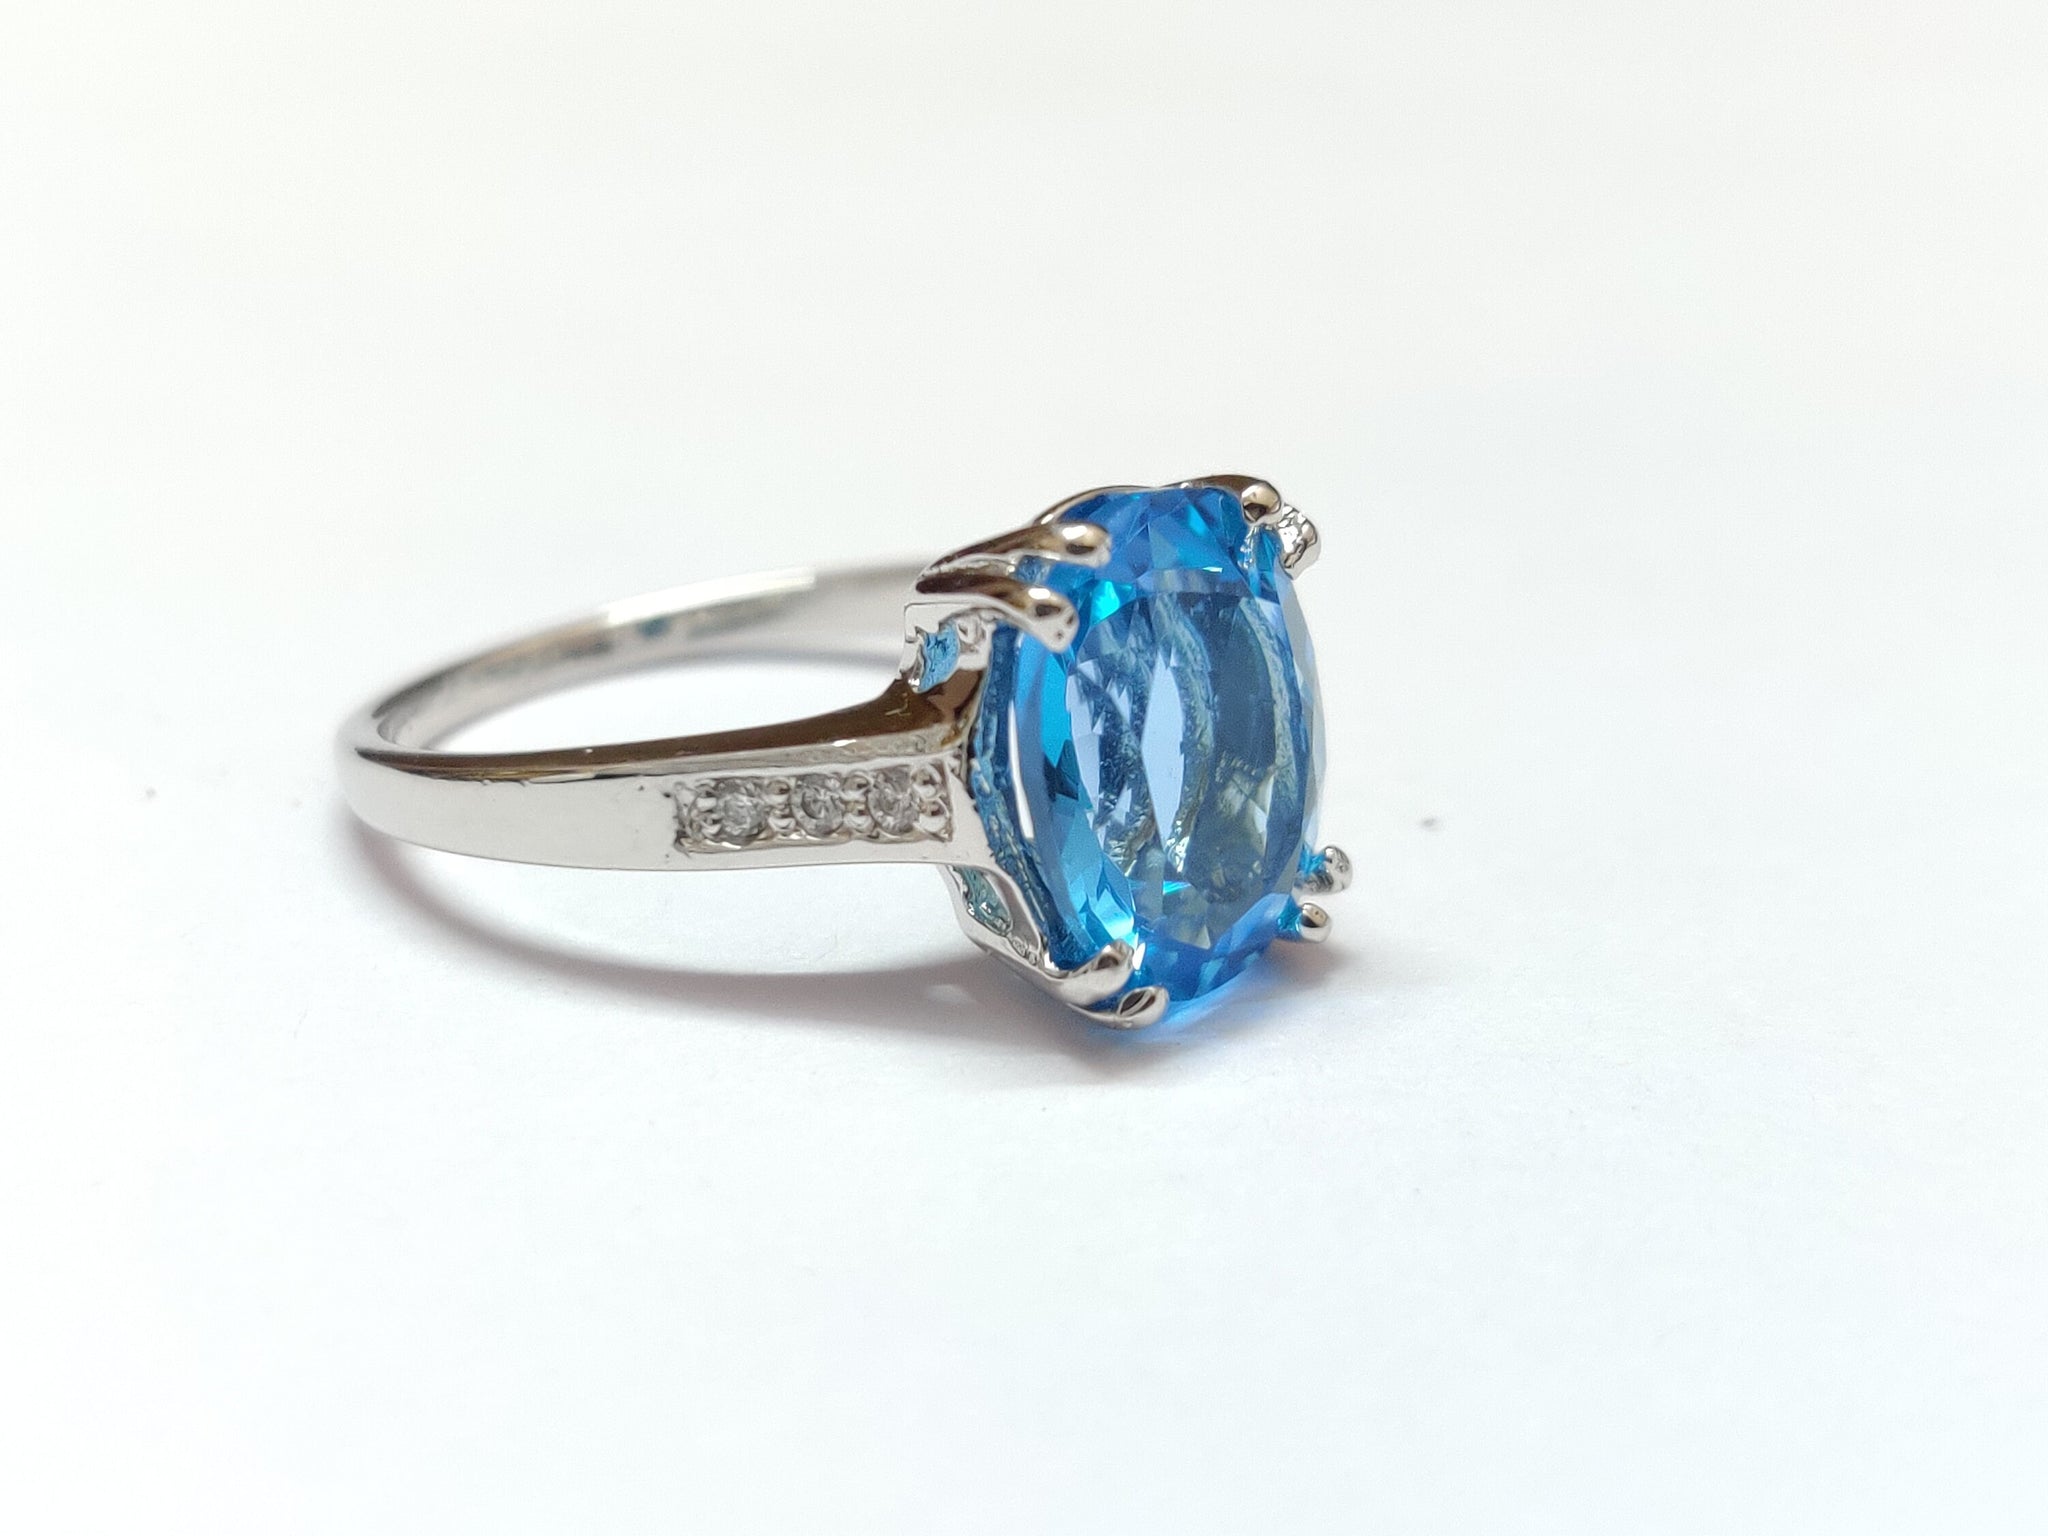 Swiss Blue Topaz Ring 6 Ct Natural Swiss Blue Topaz 10x12 mm Oval Ring Large Swiss Topaz Ring Swiss Blue Topaz Wedding Ring Promise Ring